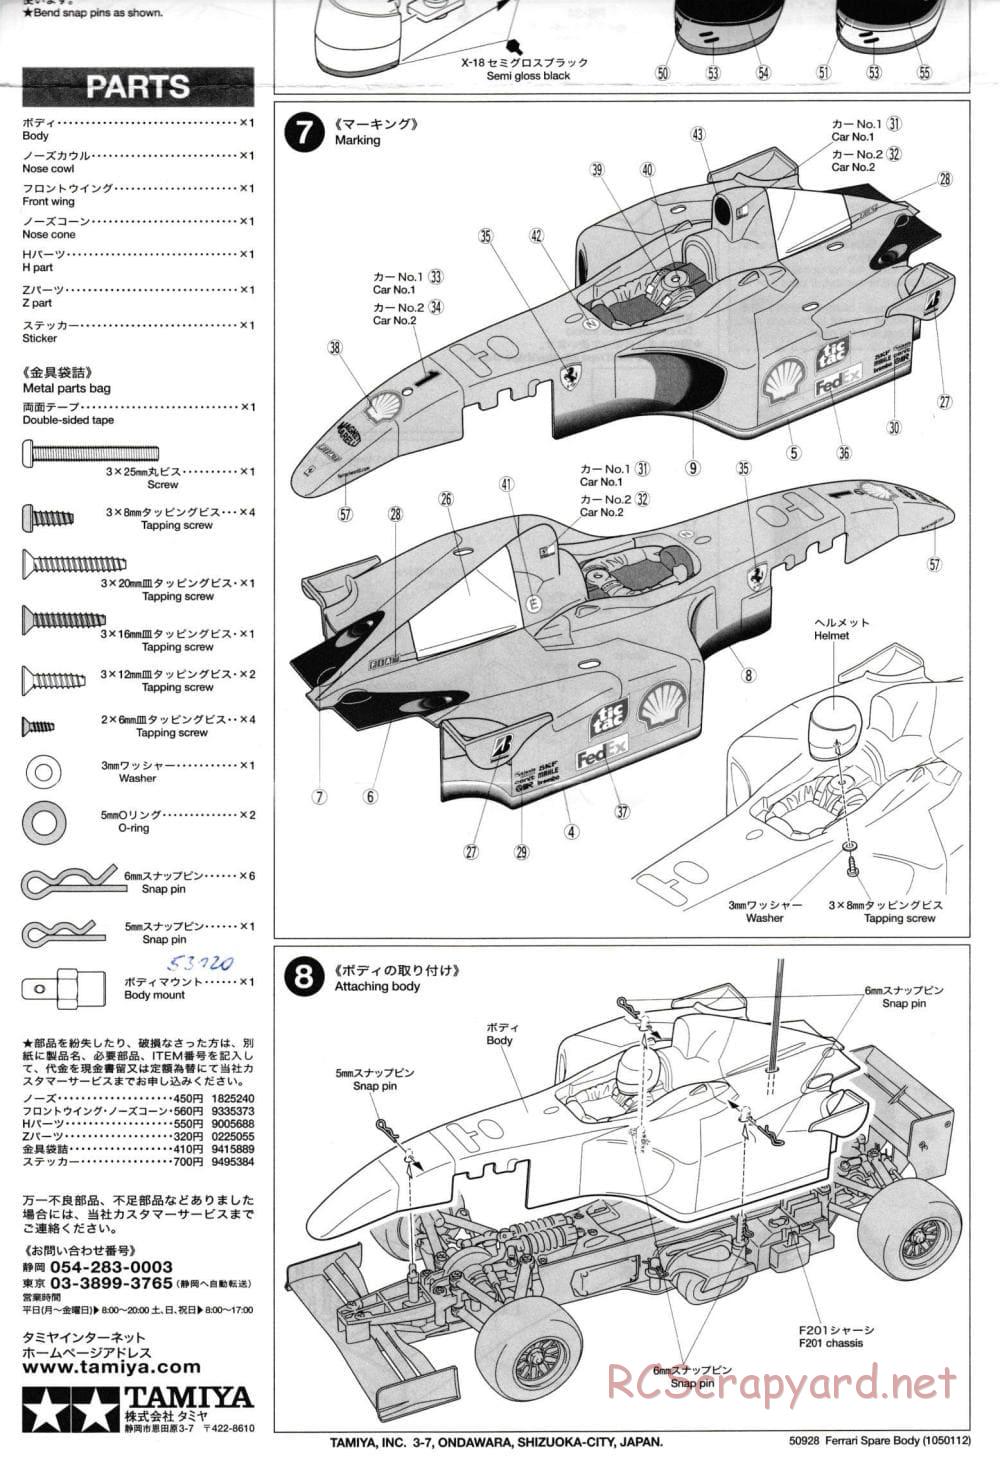 Tamiya - Ferrari F2001 - F201 Chassis - Body Manual - Page 4